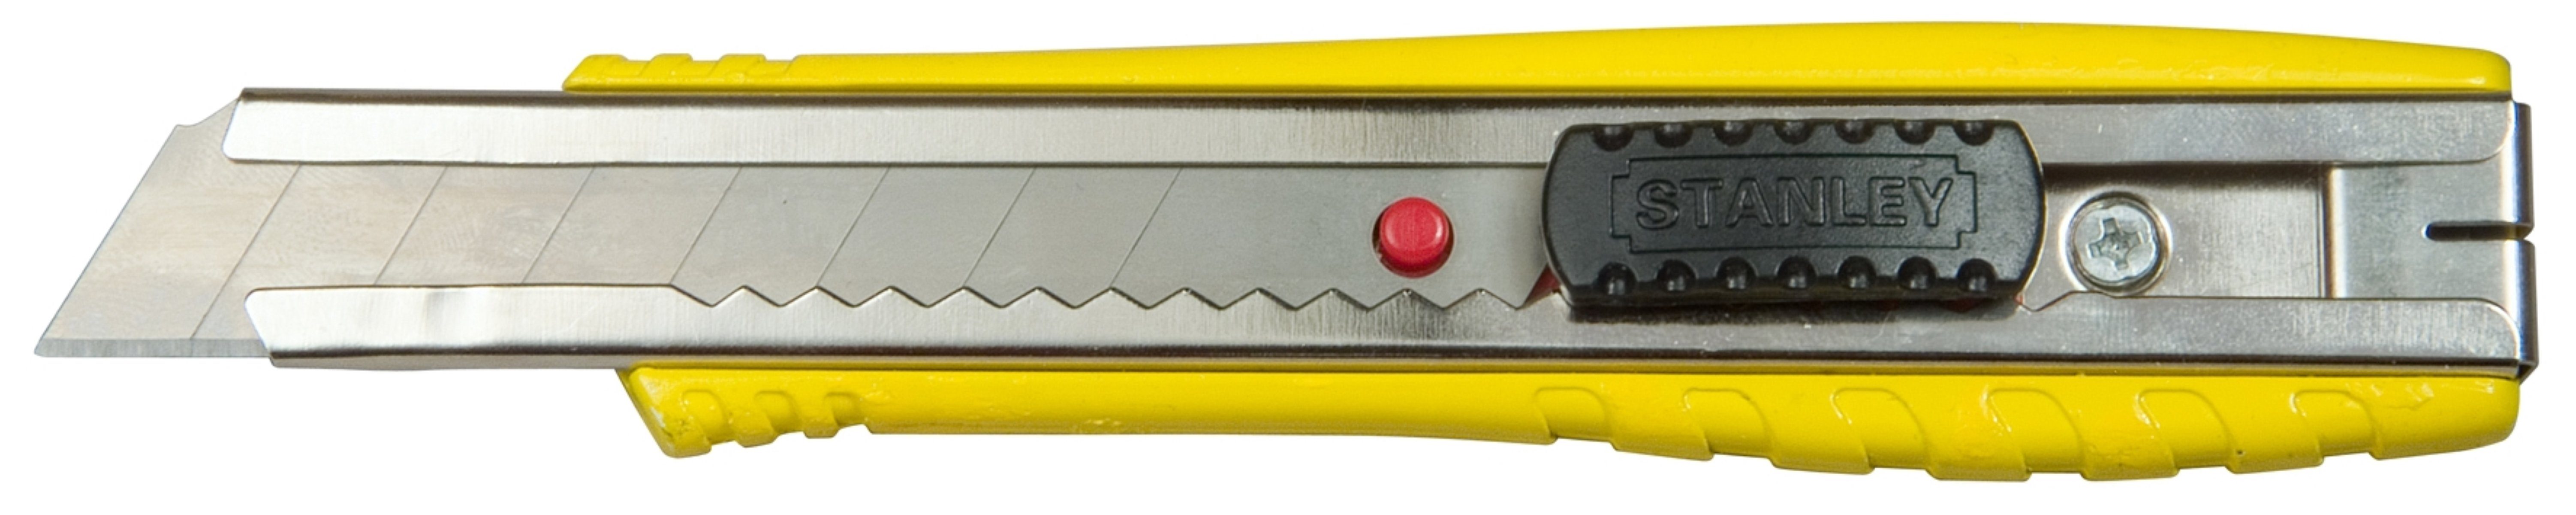 STANLEY Cuttermesser 0-10-431 FatMax Cutter 25 mm Länge 195 mm, Klinge: 2,50 cm, Auminiungehäuse rutschfester Griff